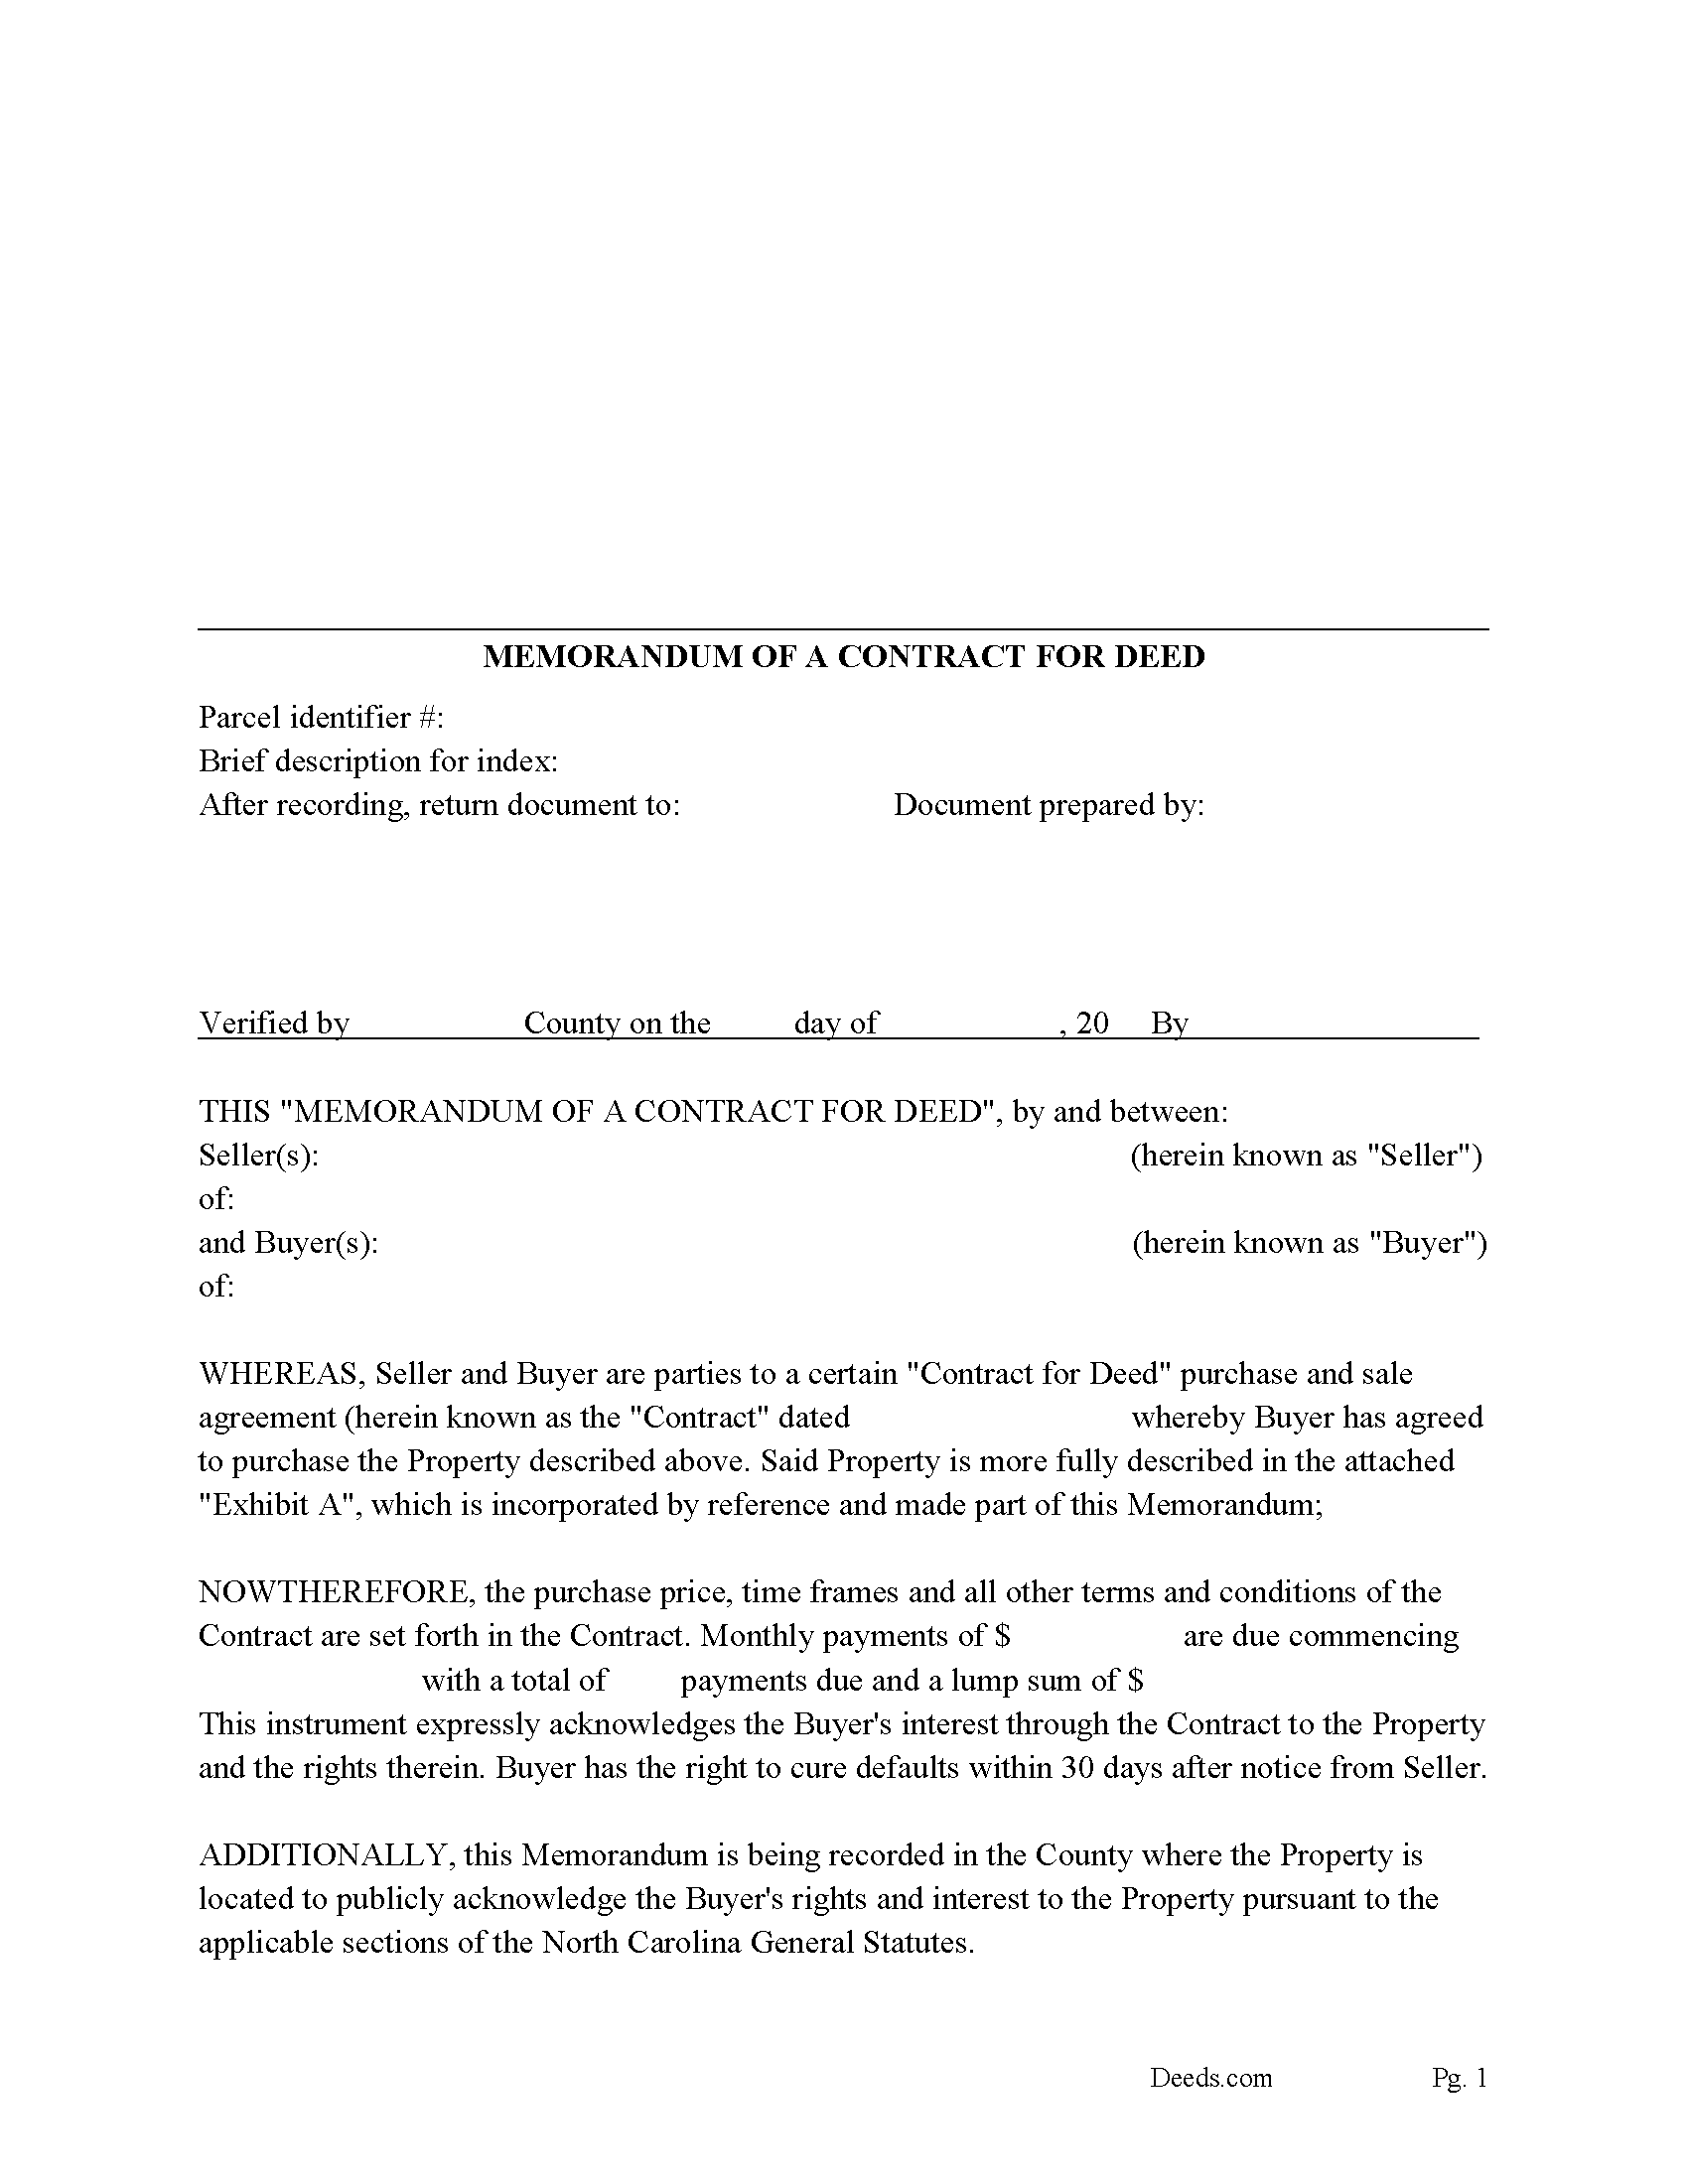 Memorandum of a Contract for Deed